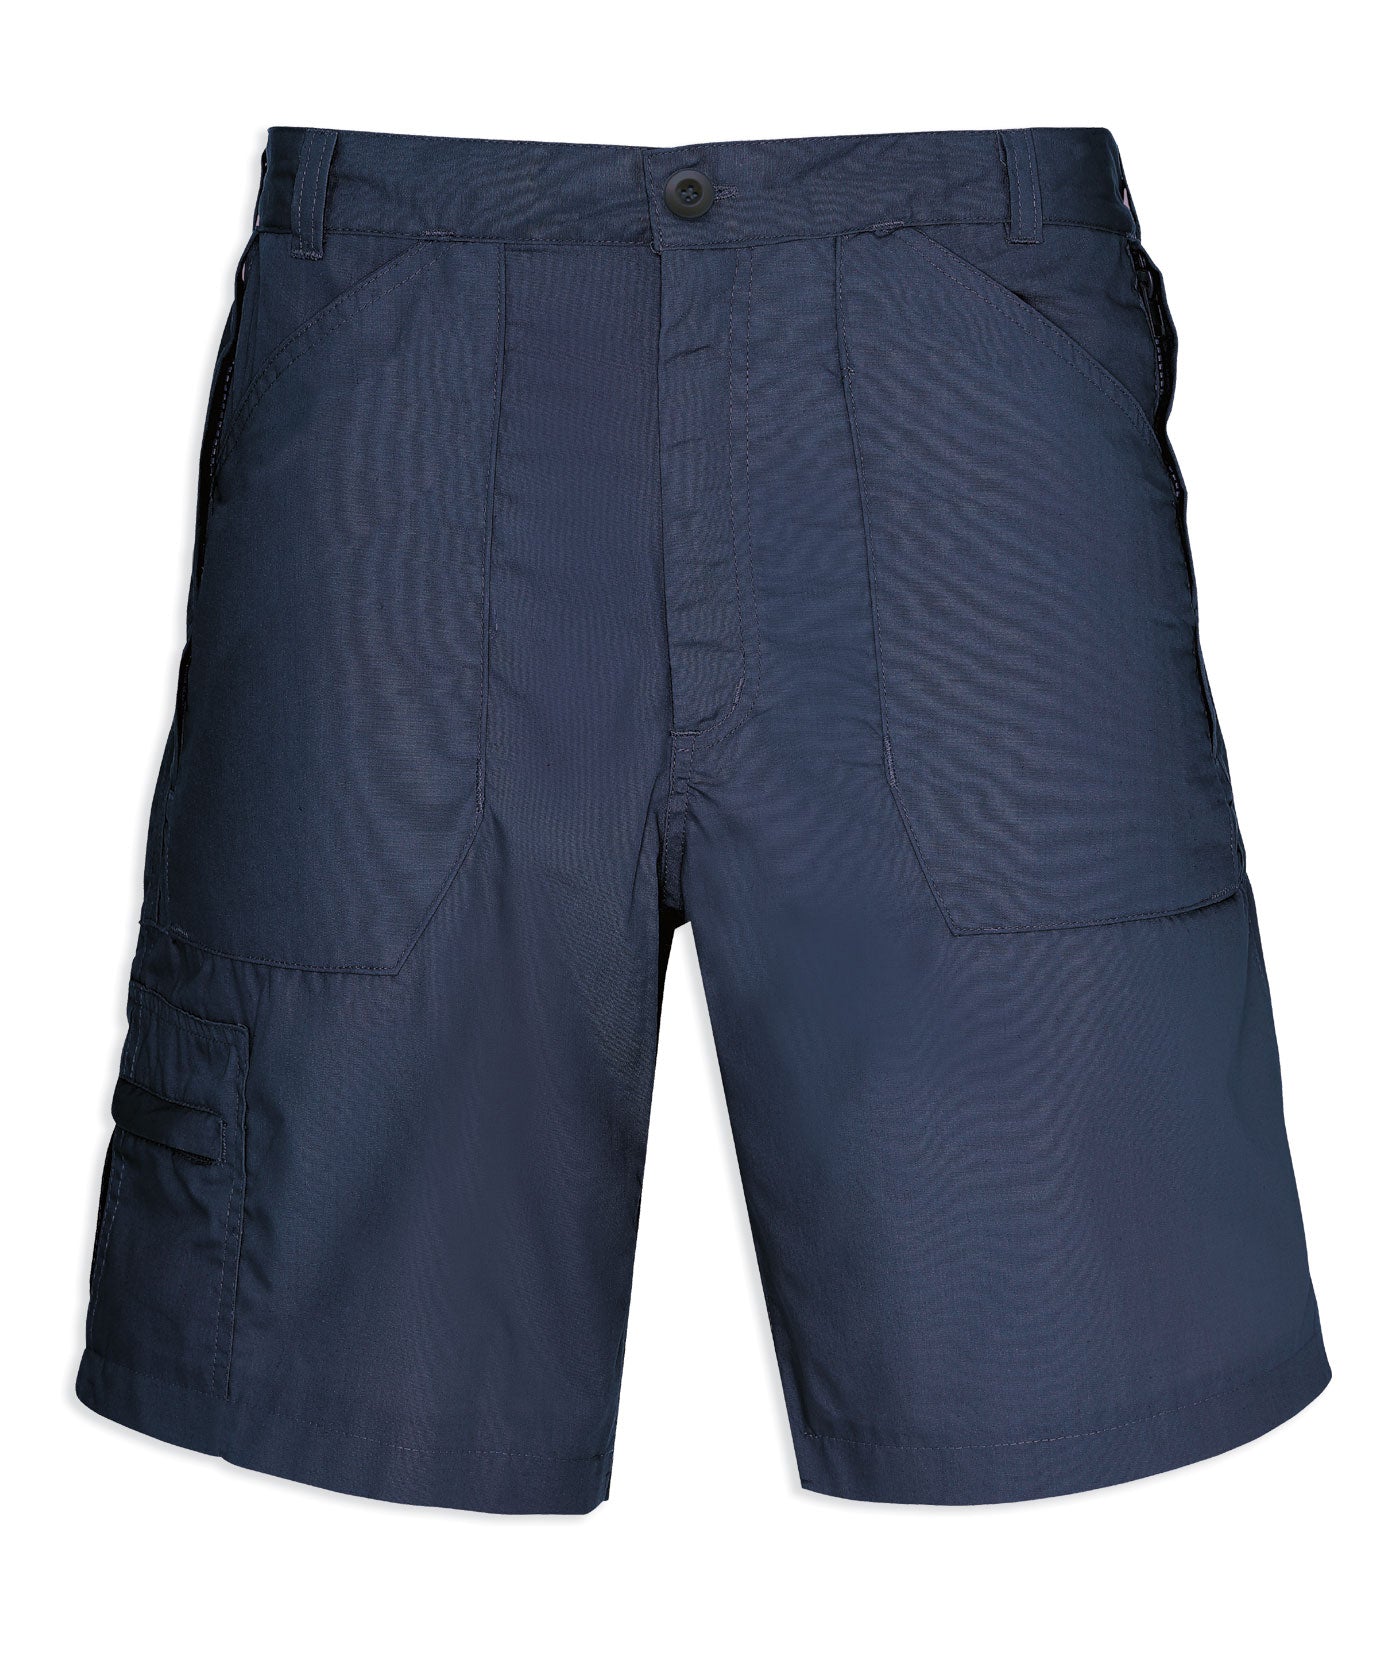 navy hiking shorts